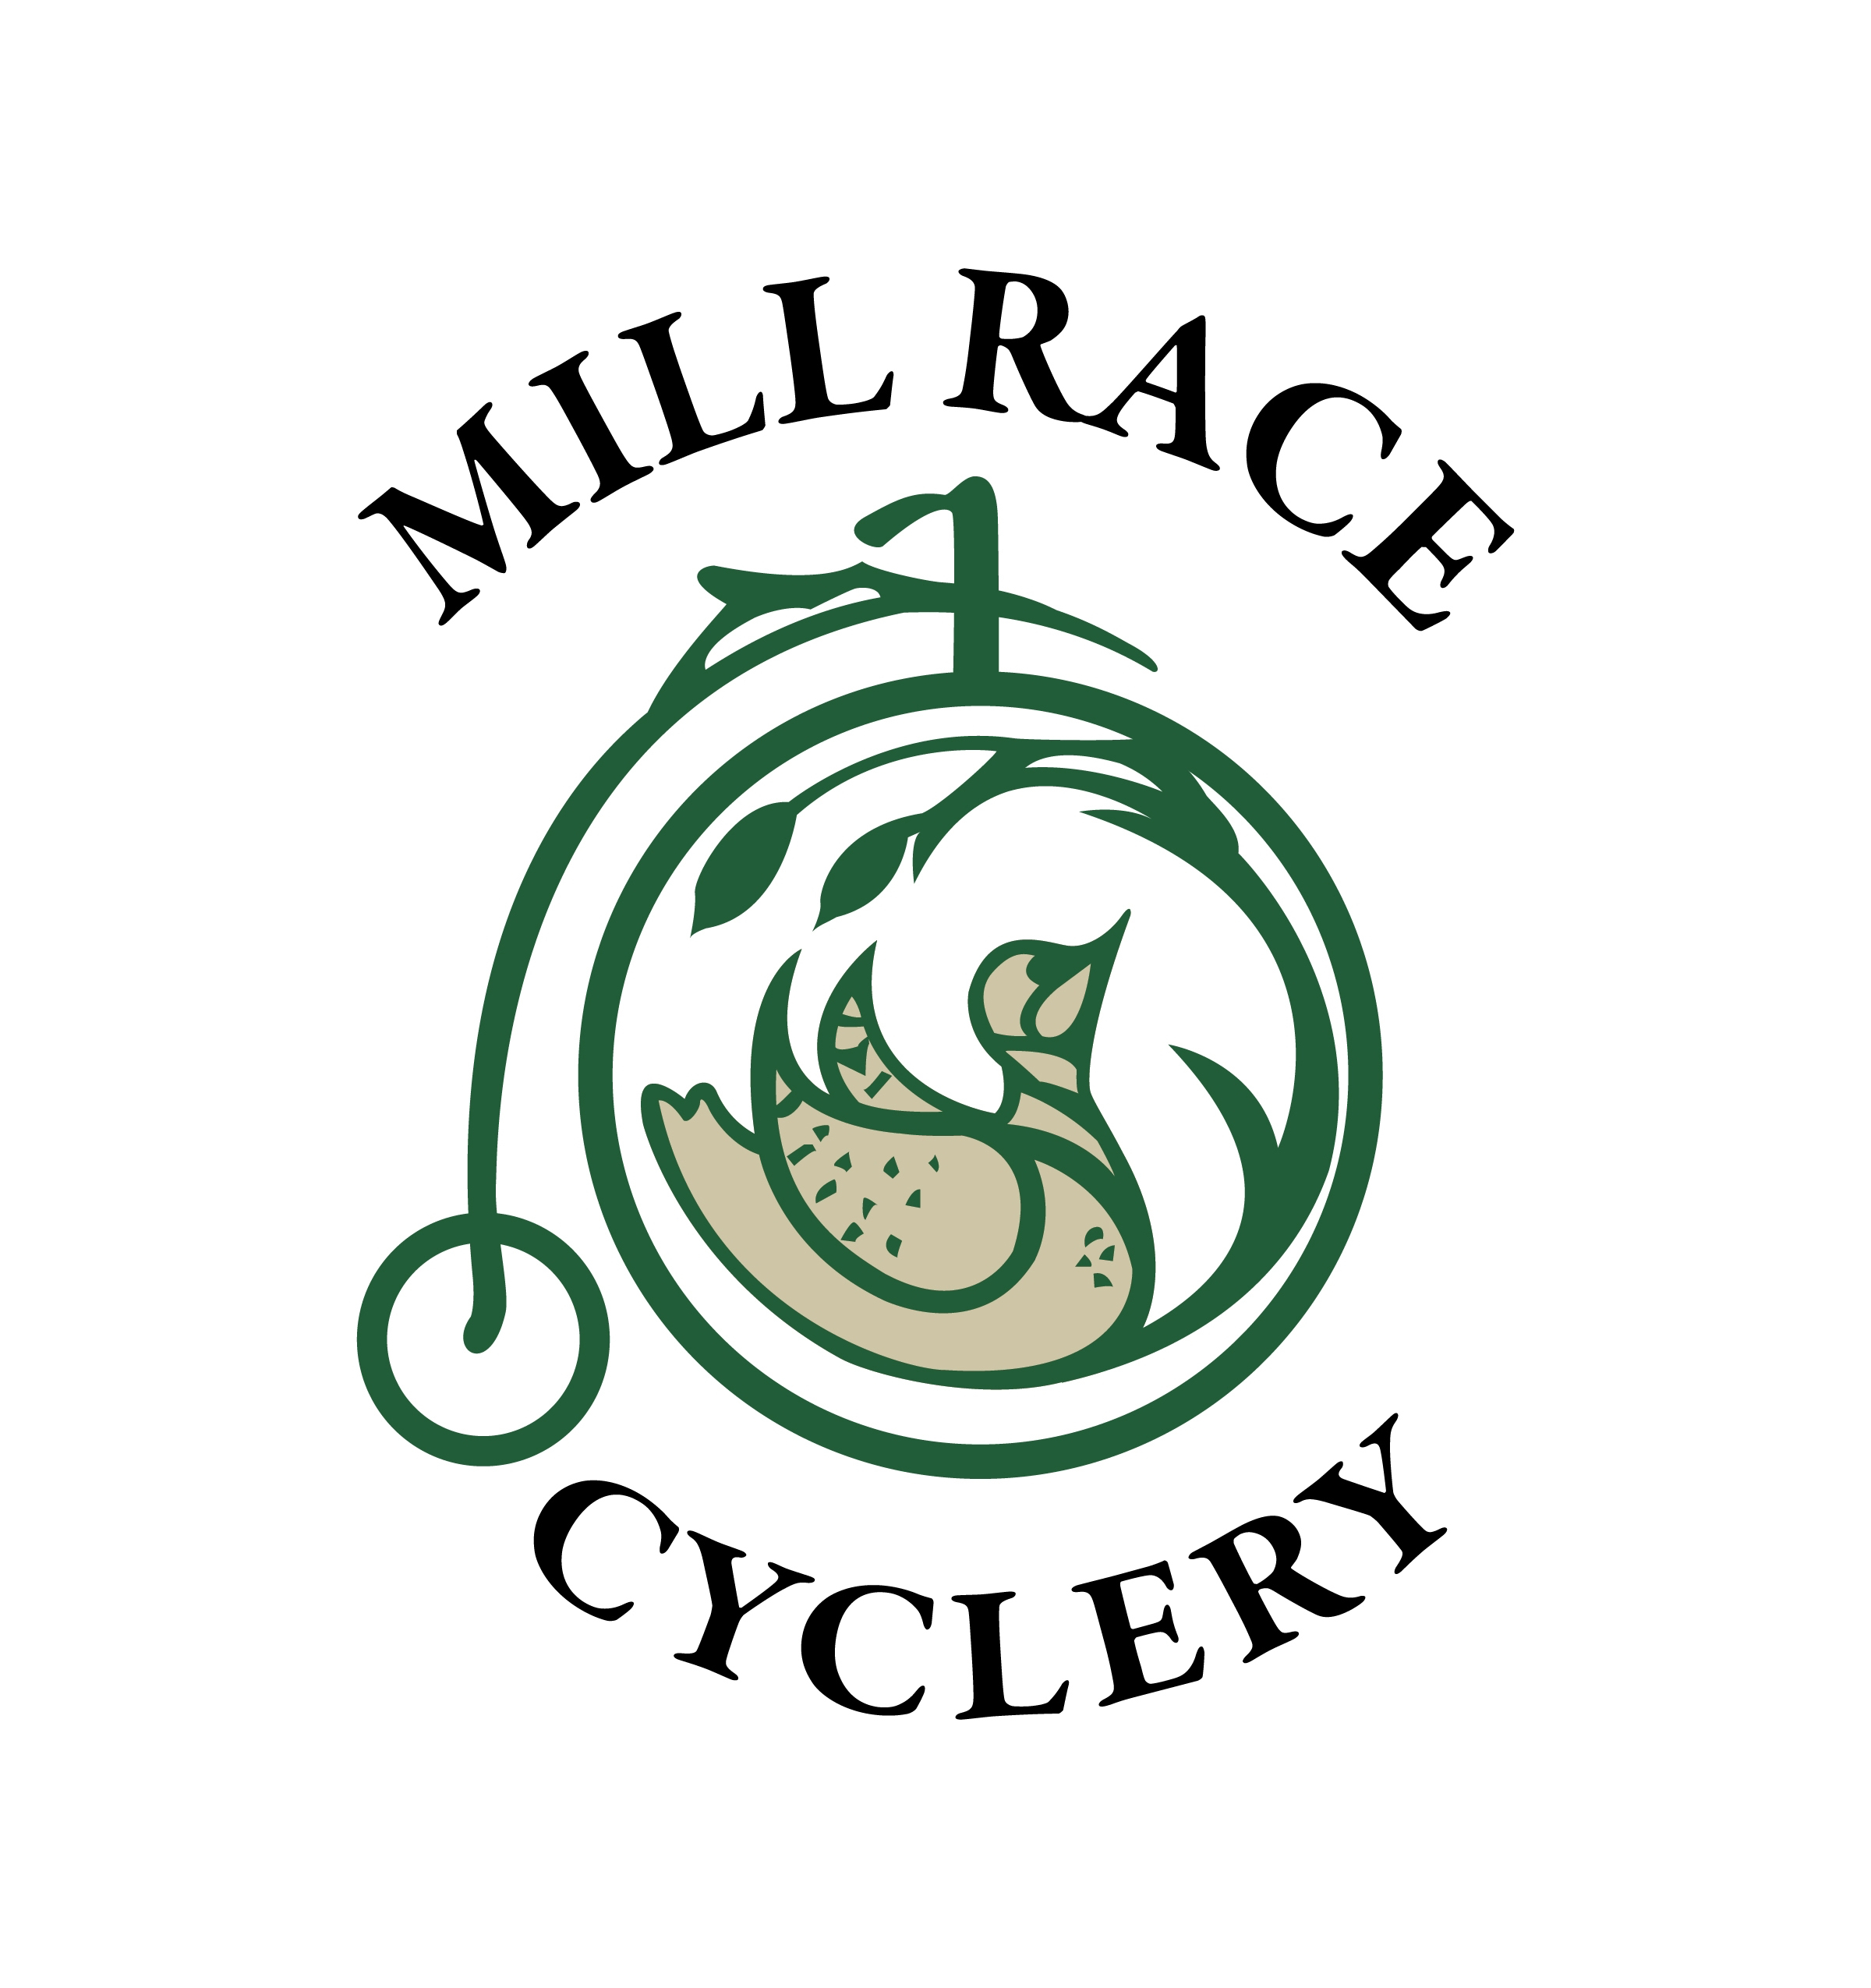 Mill Race logo RGB 2014